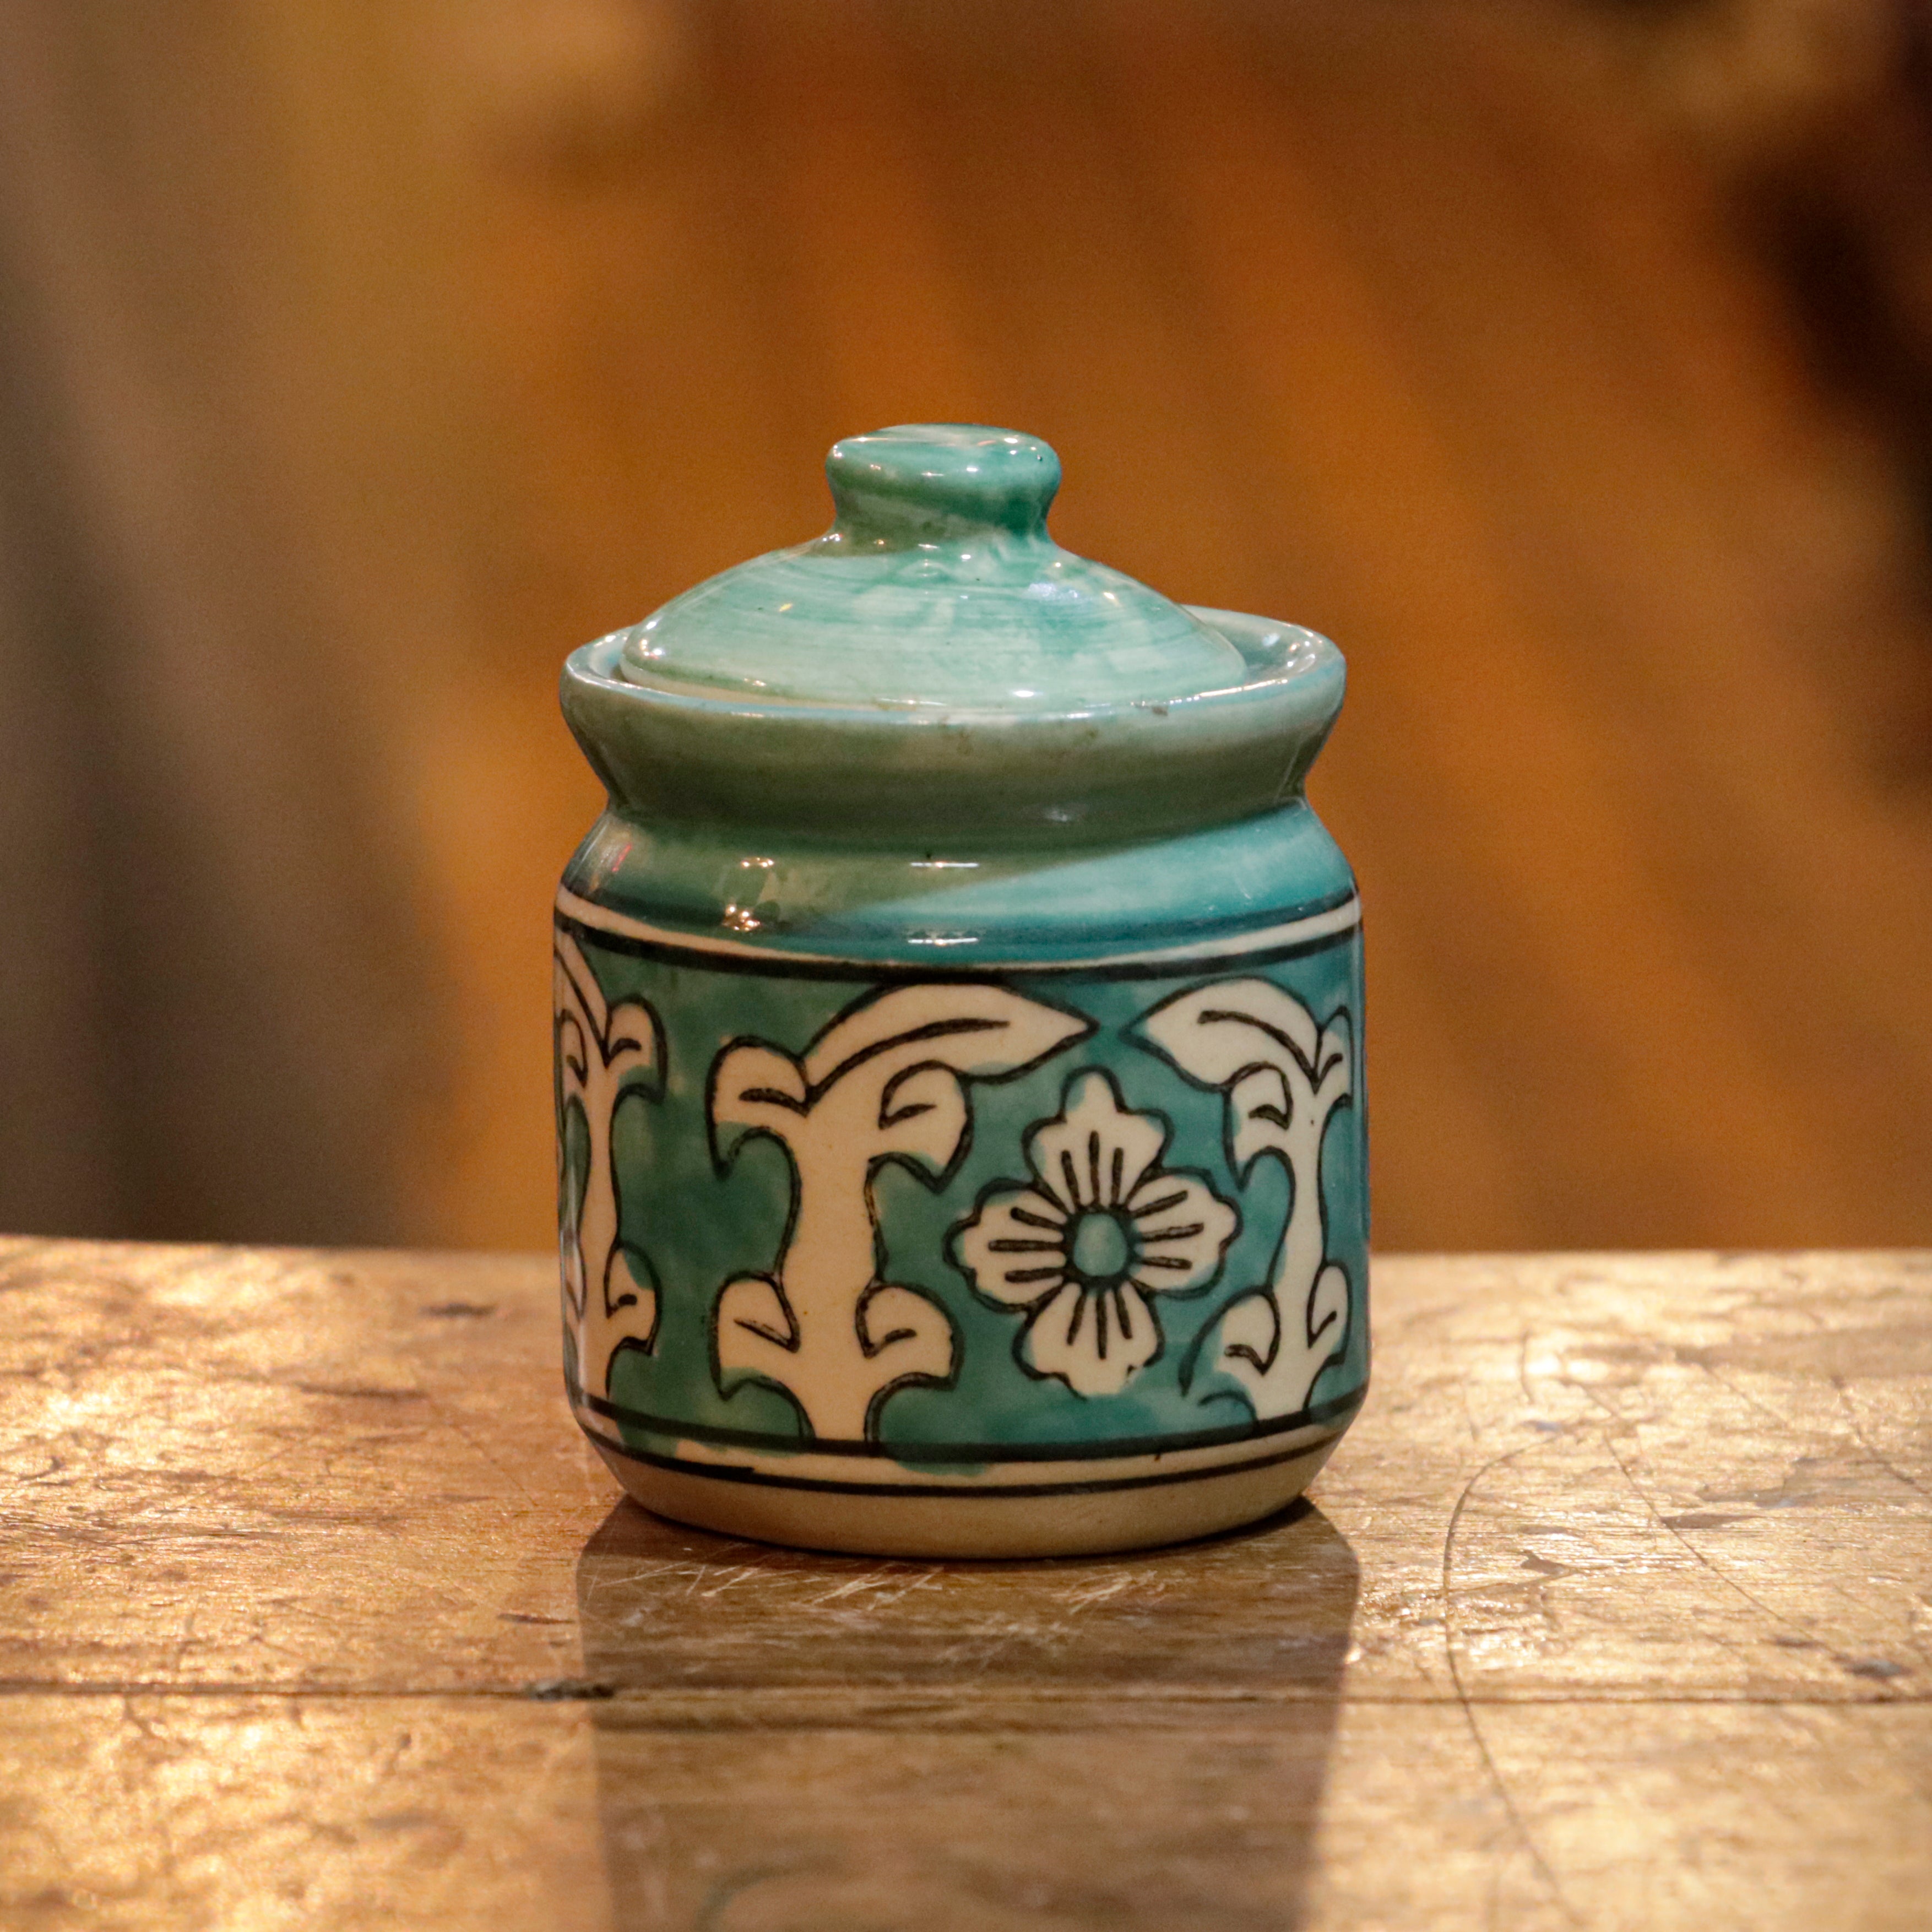 Irish Montage Flower Hand-Painted Ceramic Pickle Storage Jar - Small Ceramic jar